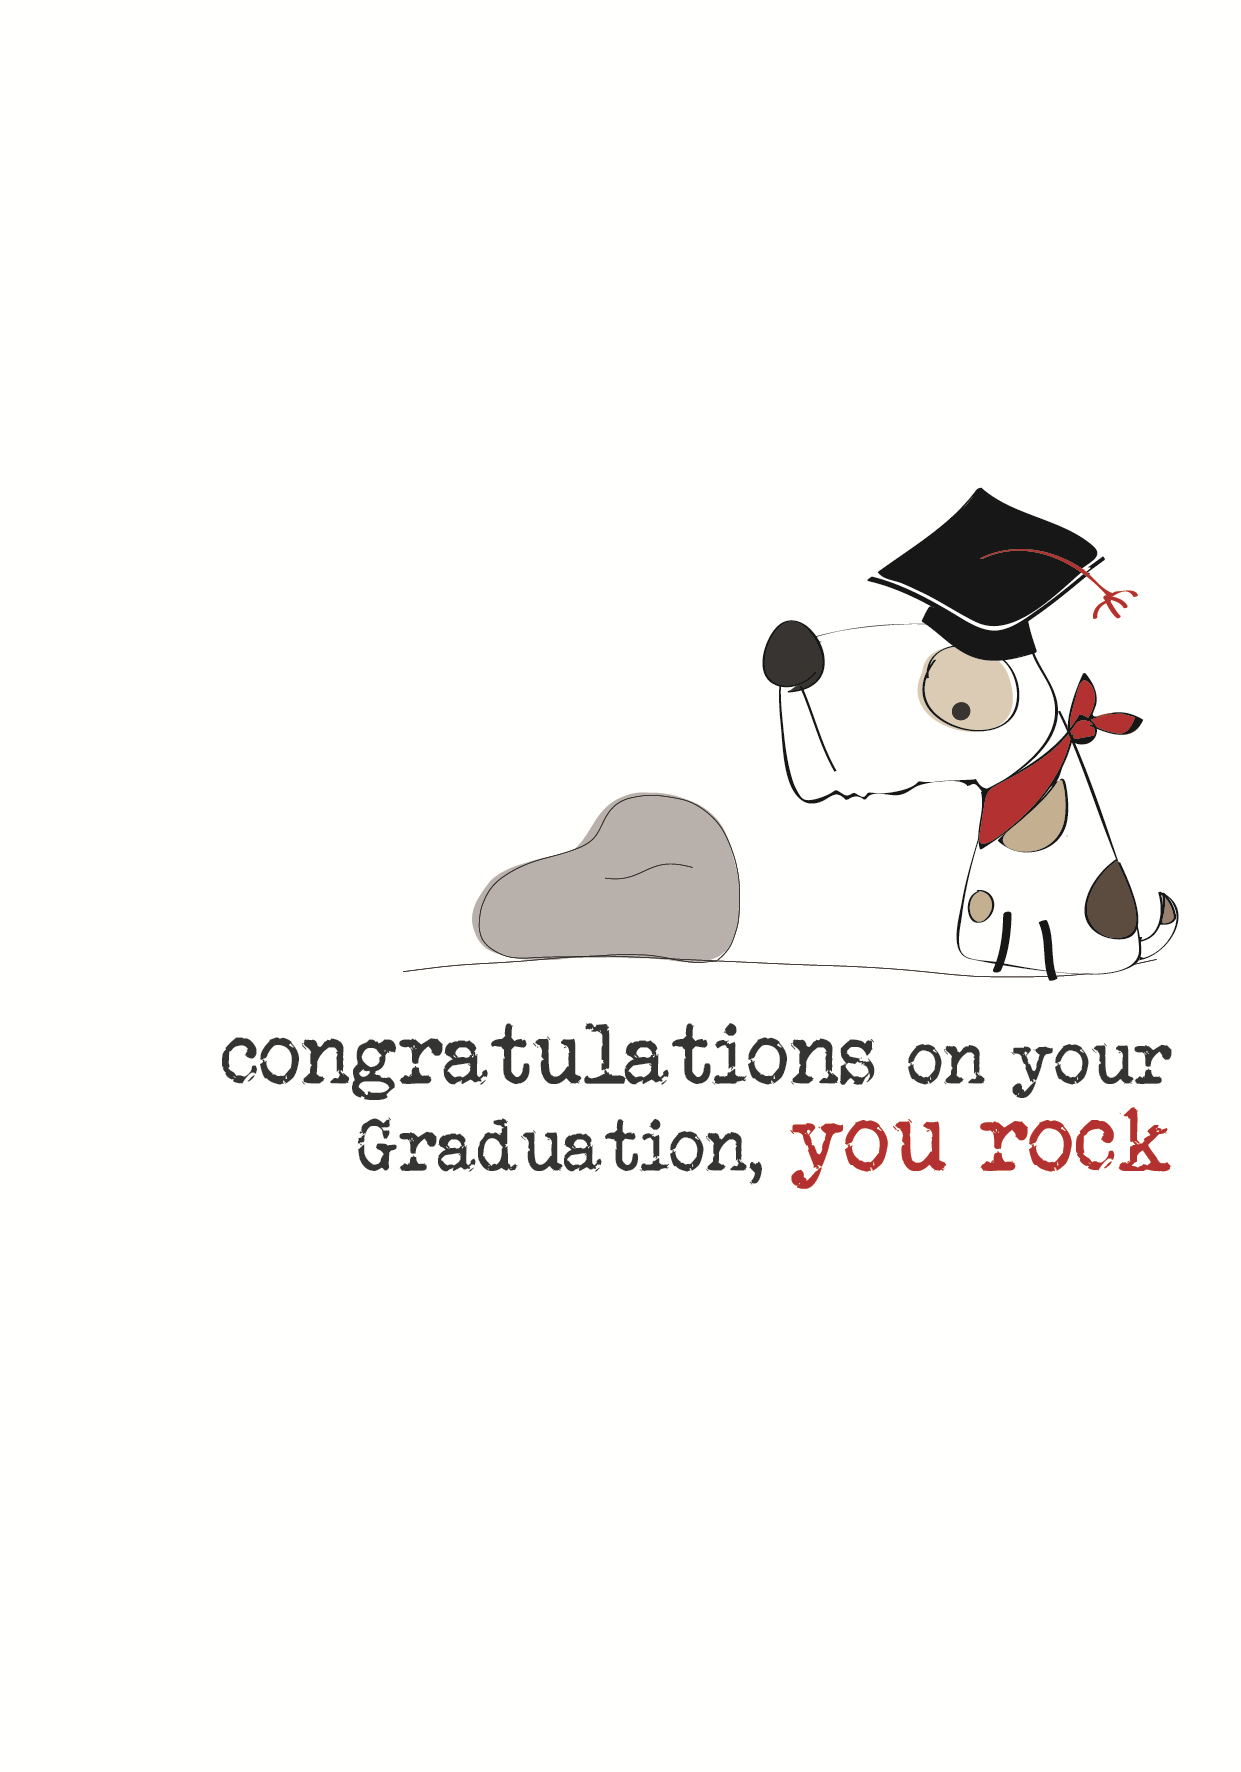 Congratulations On Your Graduation, You Rock!